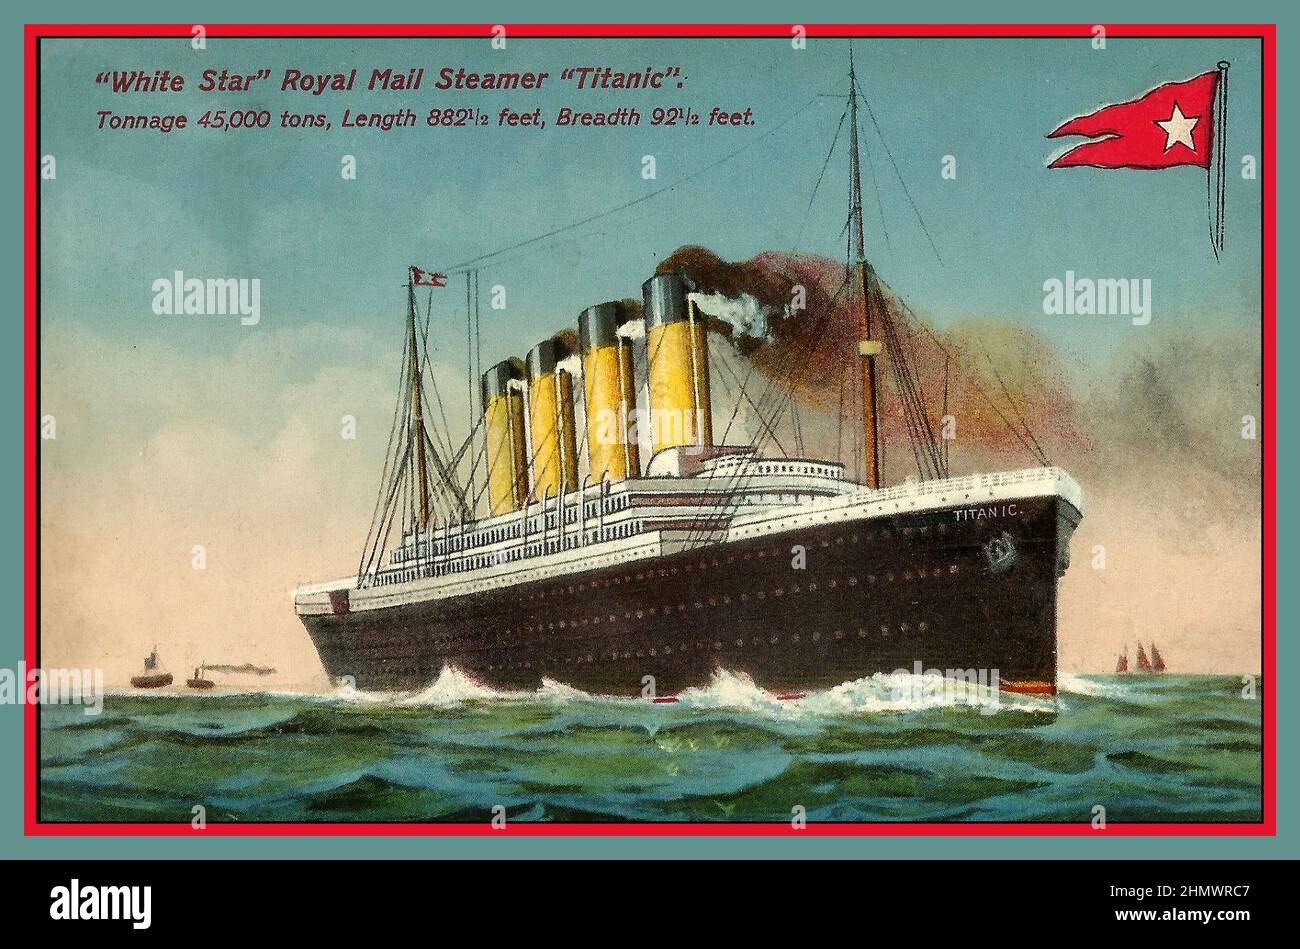 RMS TITANIC 1912 ILLUSTRATION POSTKARTE Vintage 1912 Titanic ‘White Star Royal Mail Steamer’ Tonnage 45000 Promotional Color Postkarte aus der White Star Line vor ihrem tragischen Untergang Stockfoto